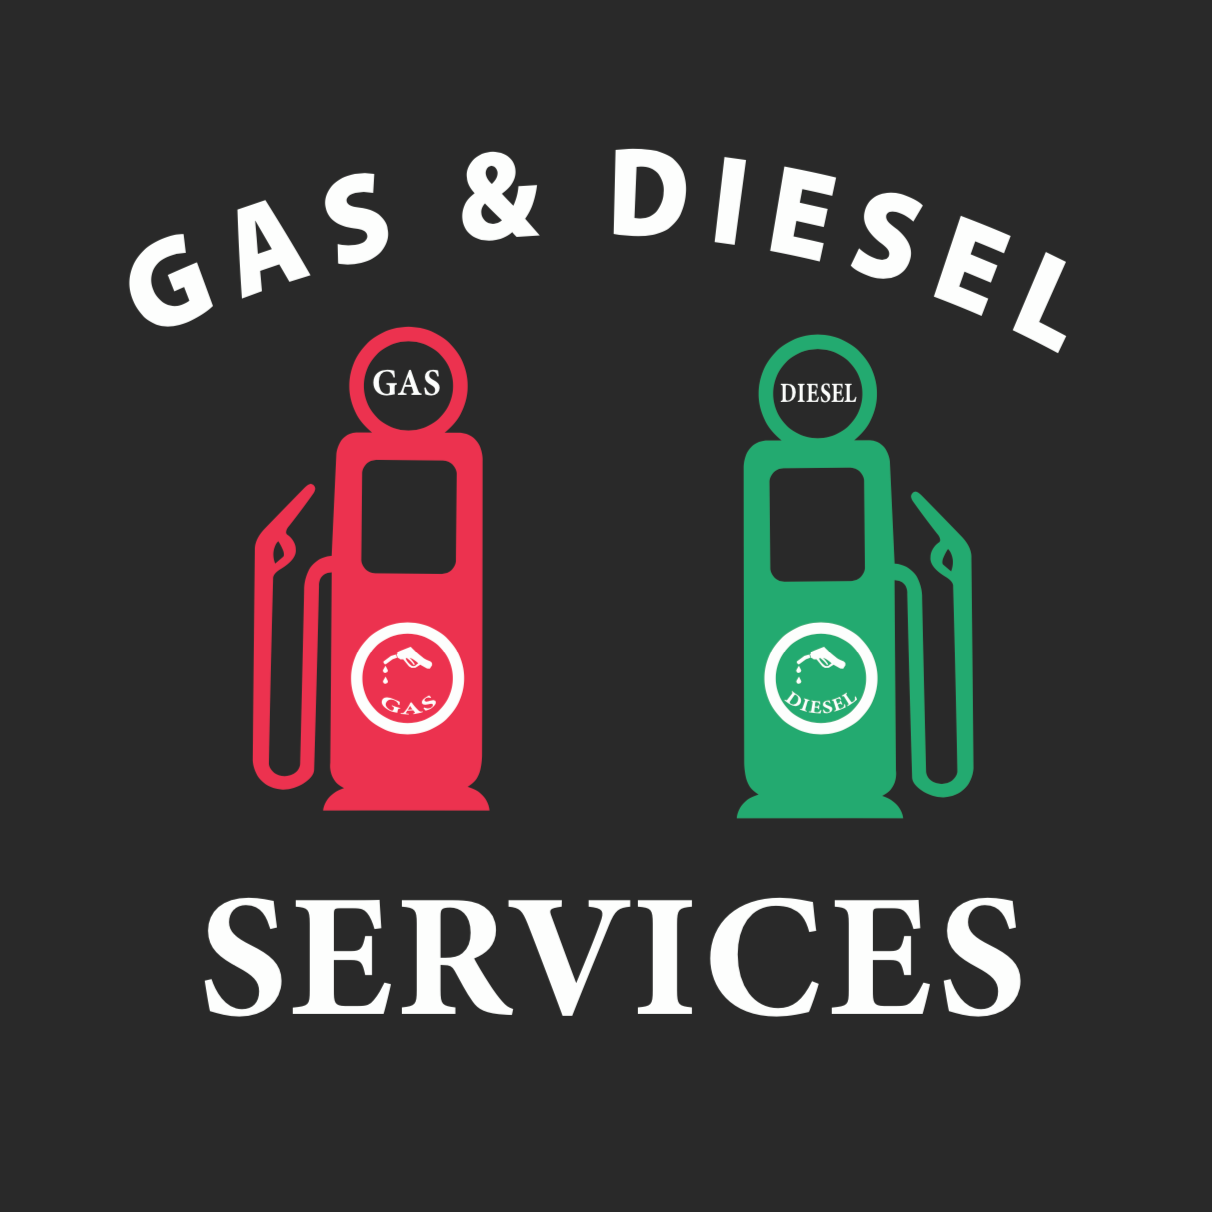 Gas & Diesel Services 347 Sunset Dr, Arco Idaho 83213